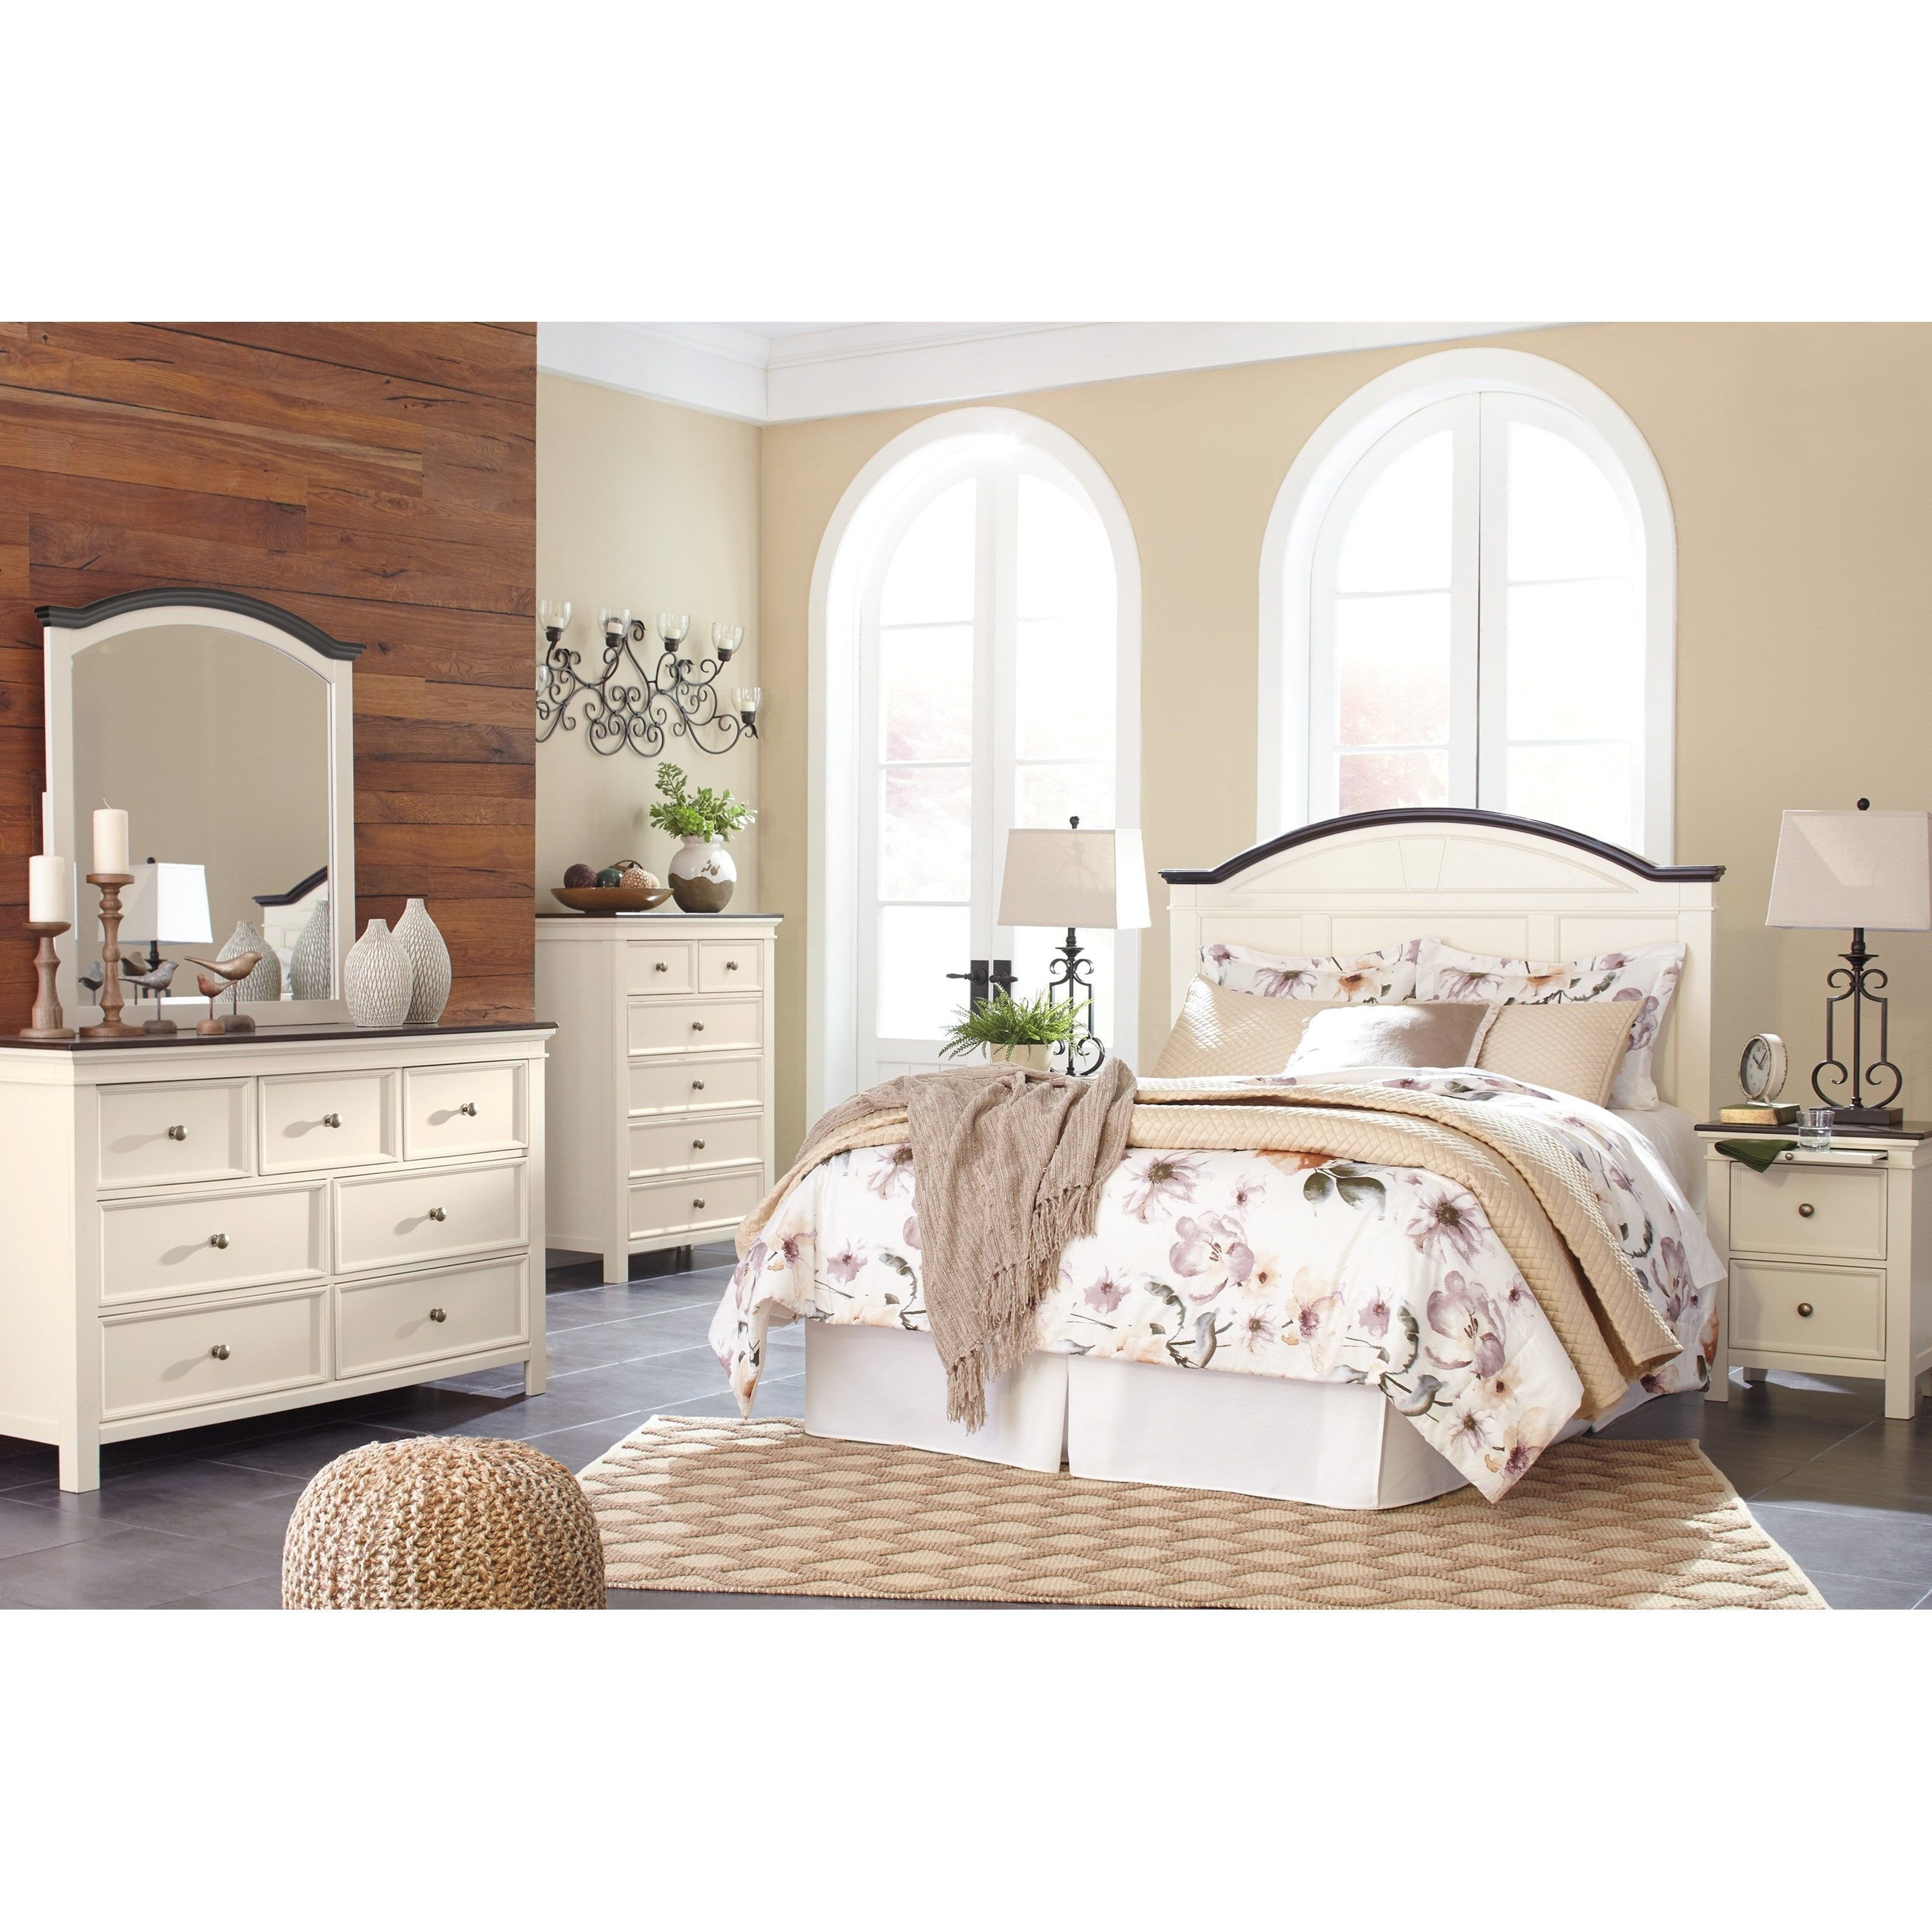 Ashley Queen Bedroom Set Fresh Woodanville Queen Bedroom Group by Signature Design by